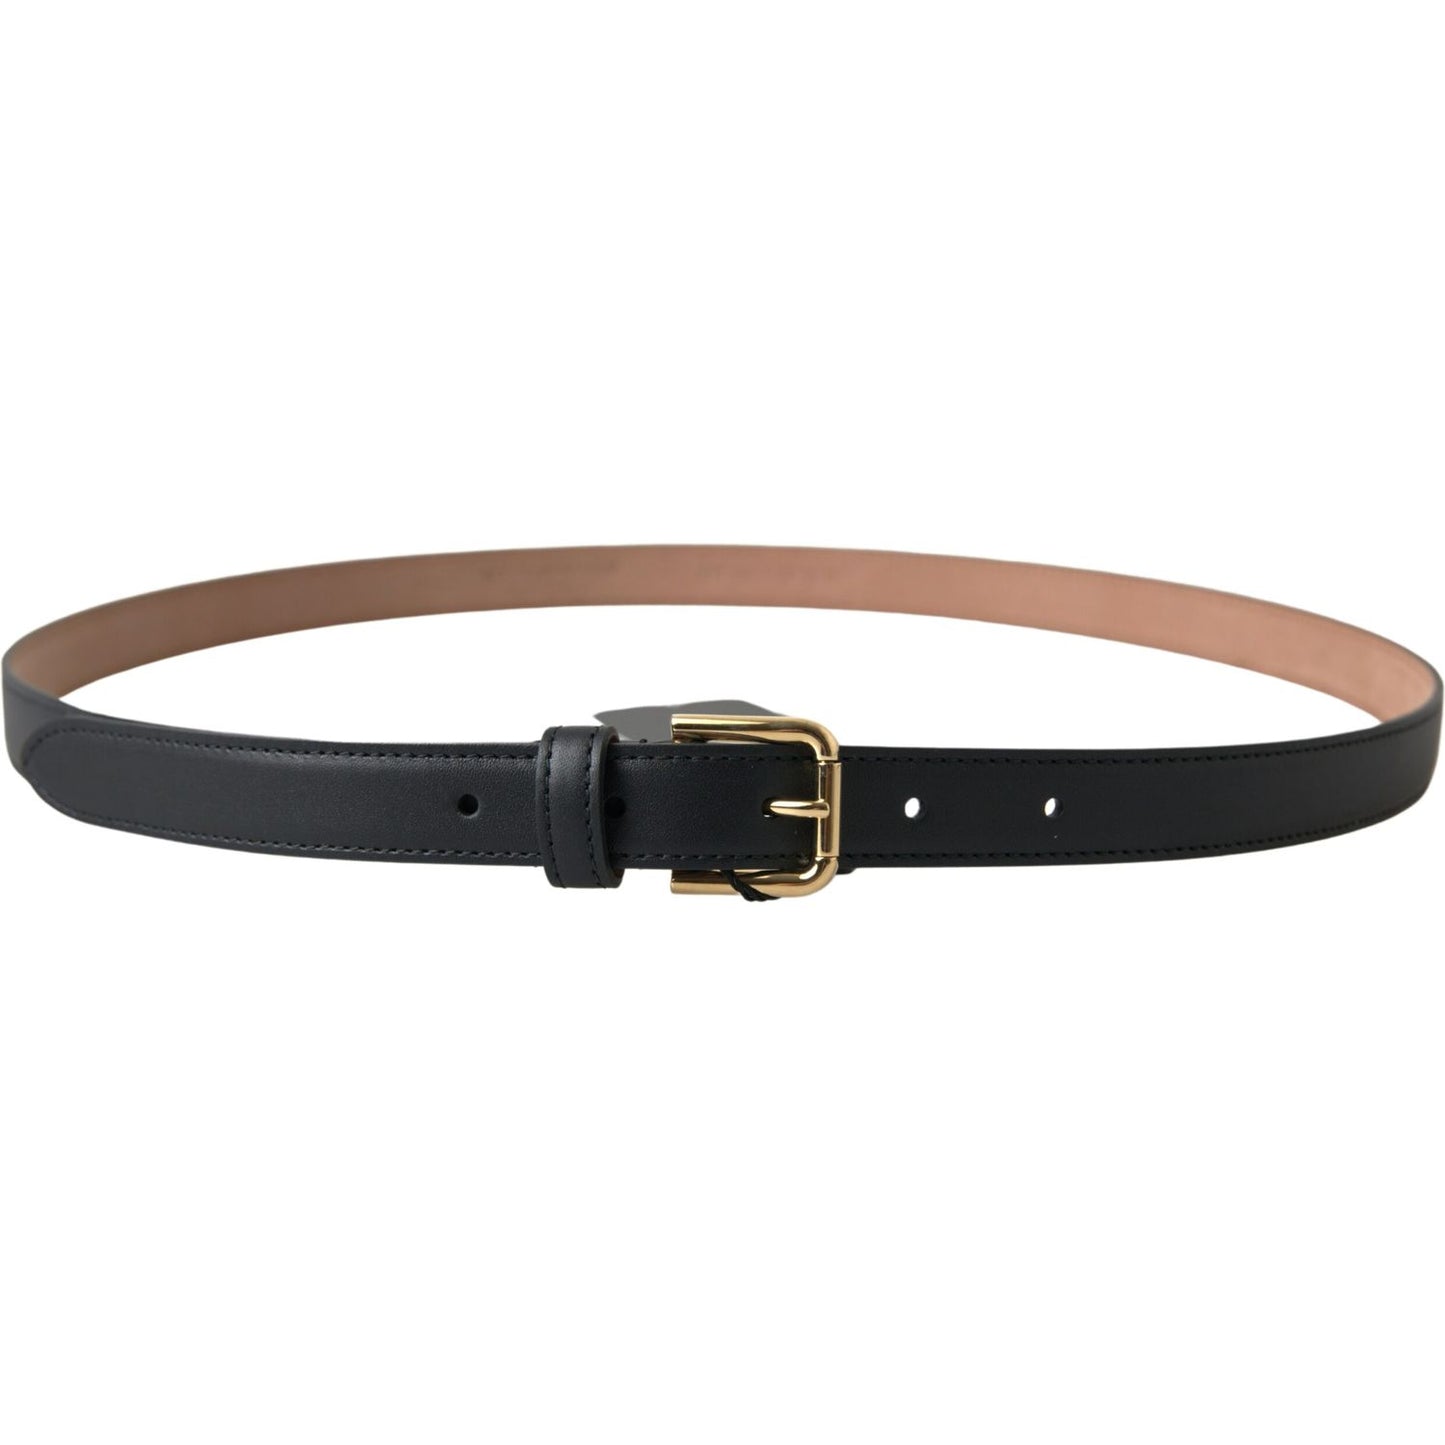 Dolce & Gabbana Elegant Italian Leather Belt with Metal Buckle black-leather-gold-tone-metal-buckle-belt 465A1099-scaled-011d40c6-2ba.jpg